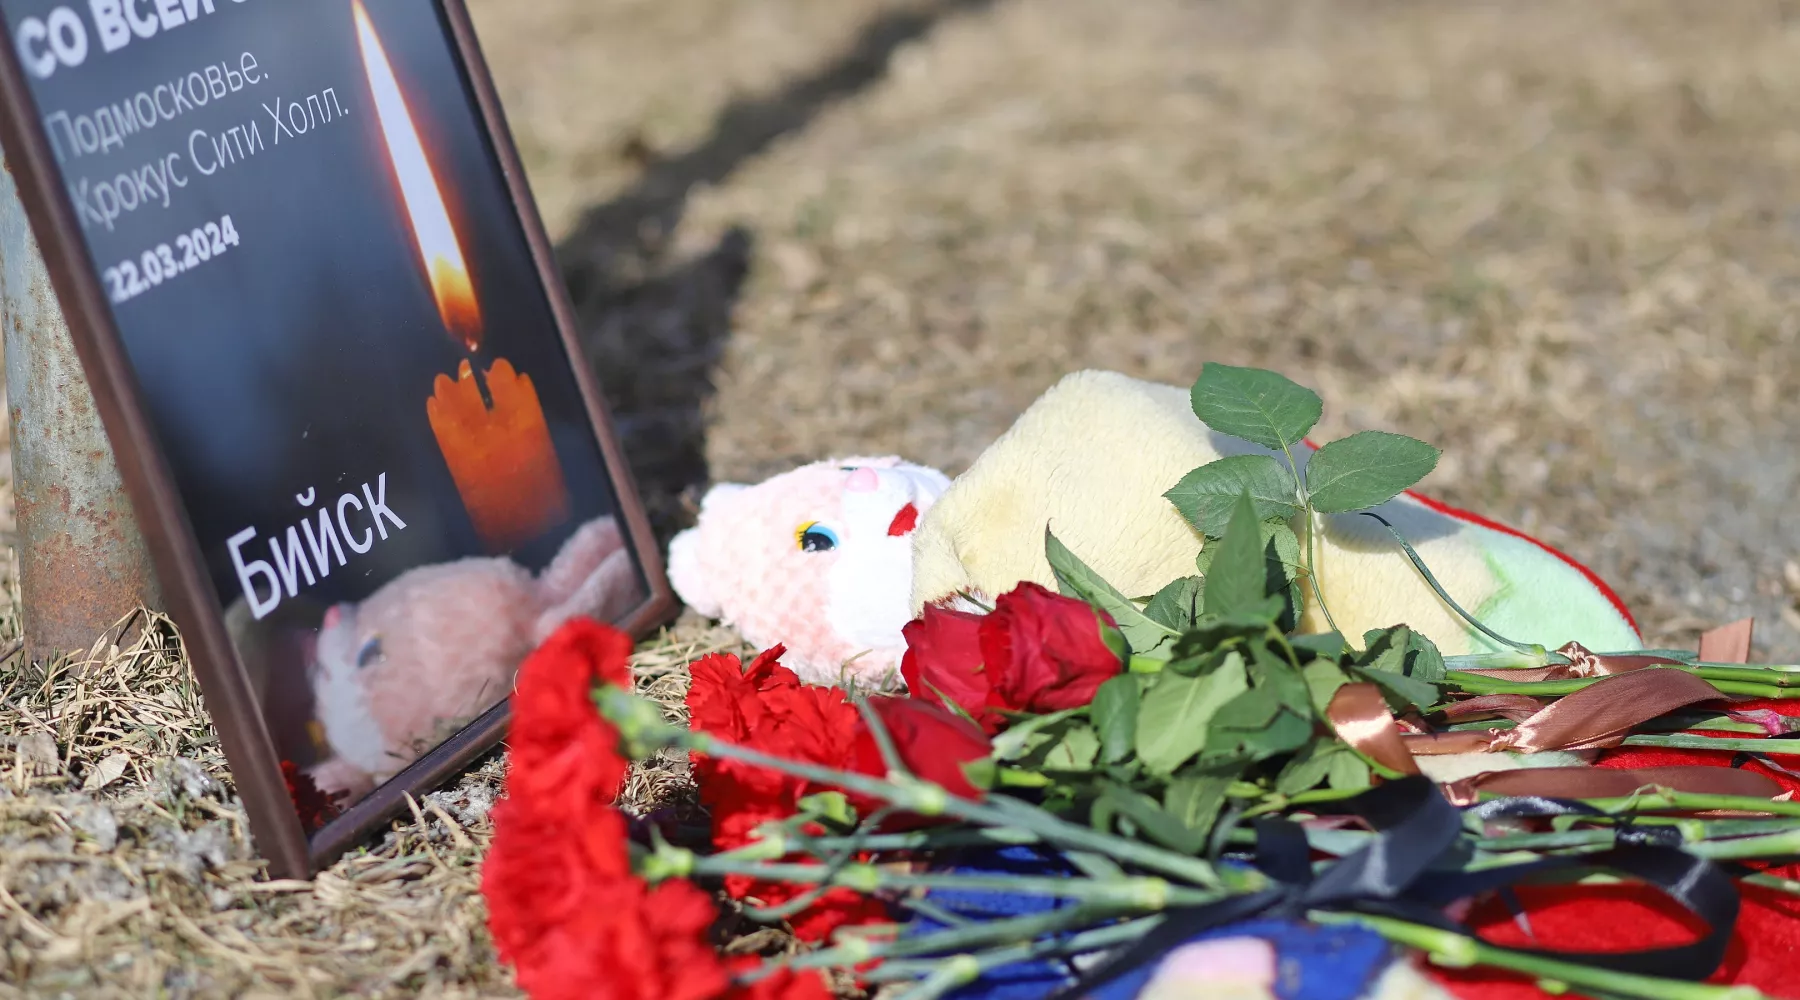 Бийчане возлагают цветы и игрушки в знак скорби по погибшим при теракте в &quot;Крокус Сити Холле&quot;